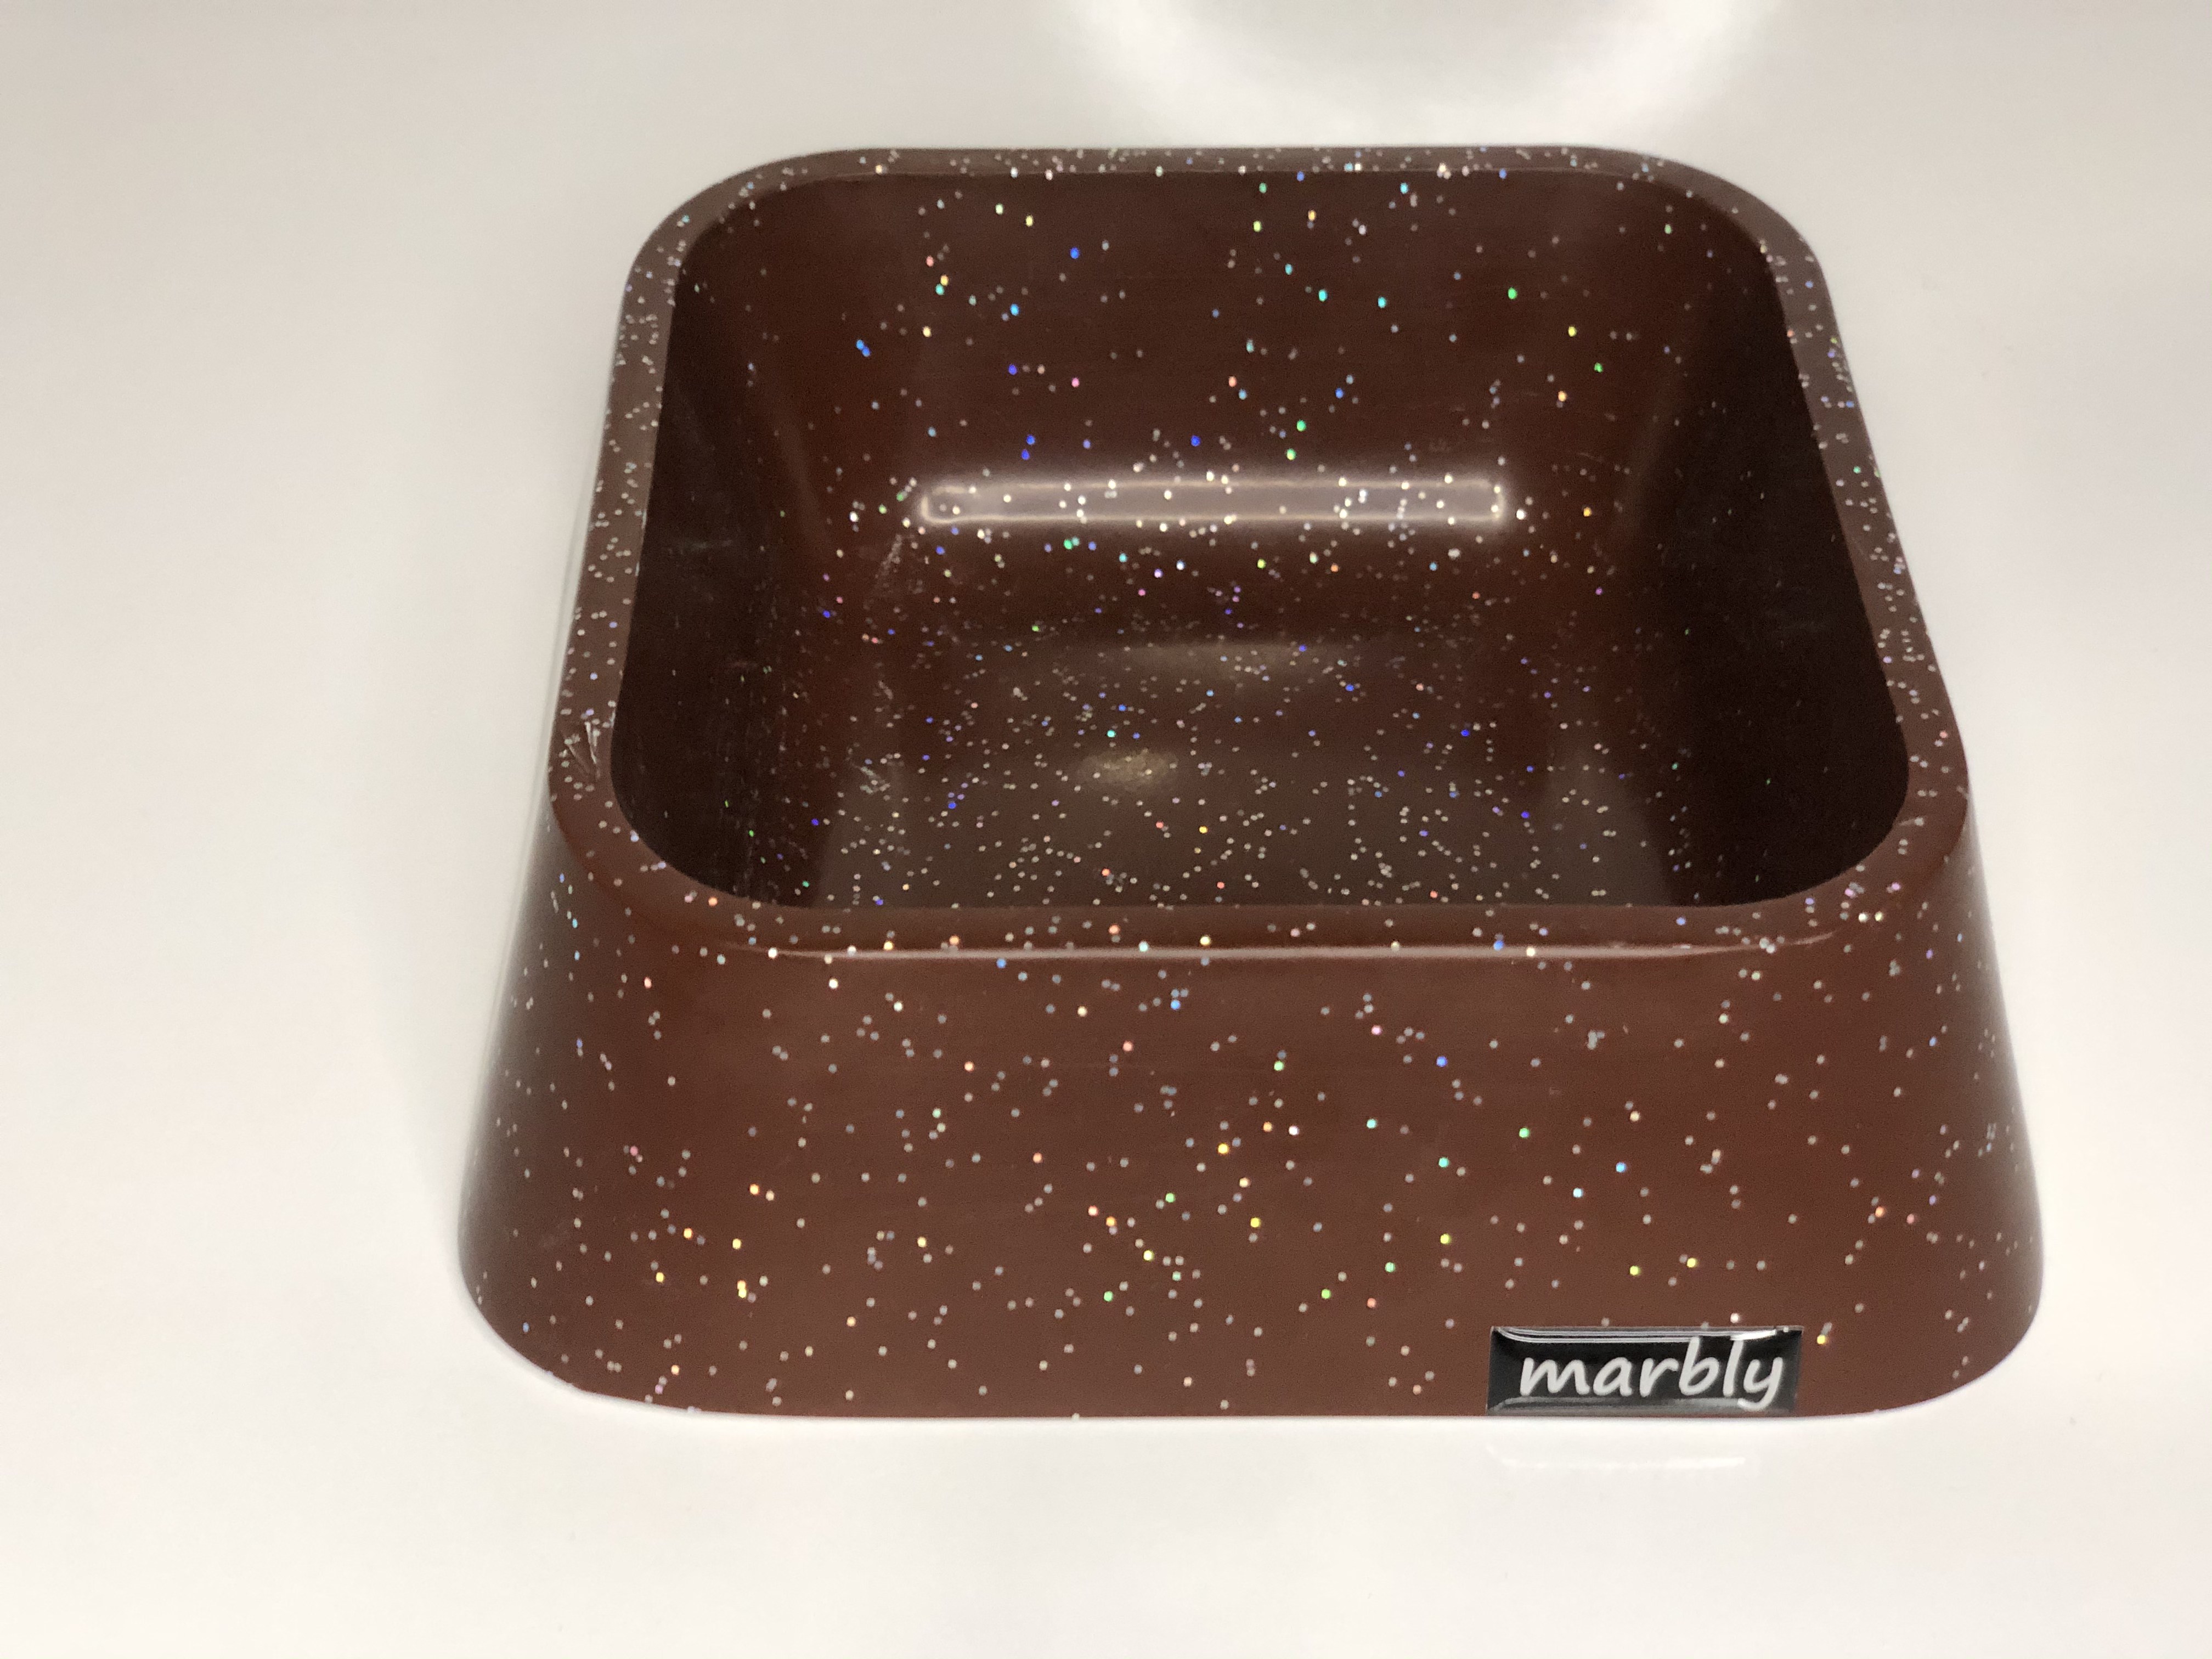 Marbly Kahve Galaxy Mermerit Köpek Mama Su Kabı 500 ml